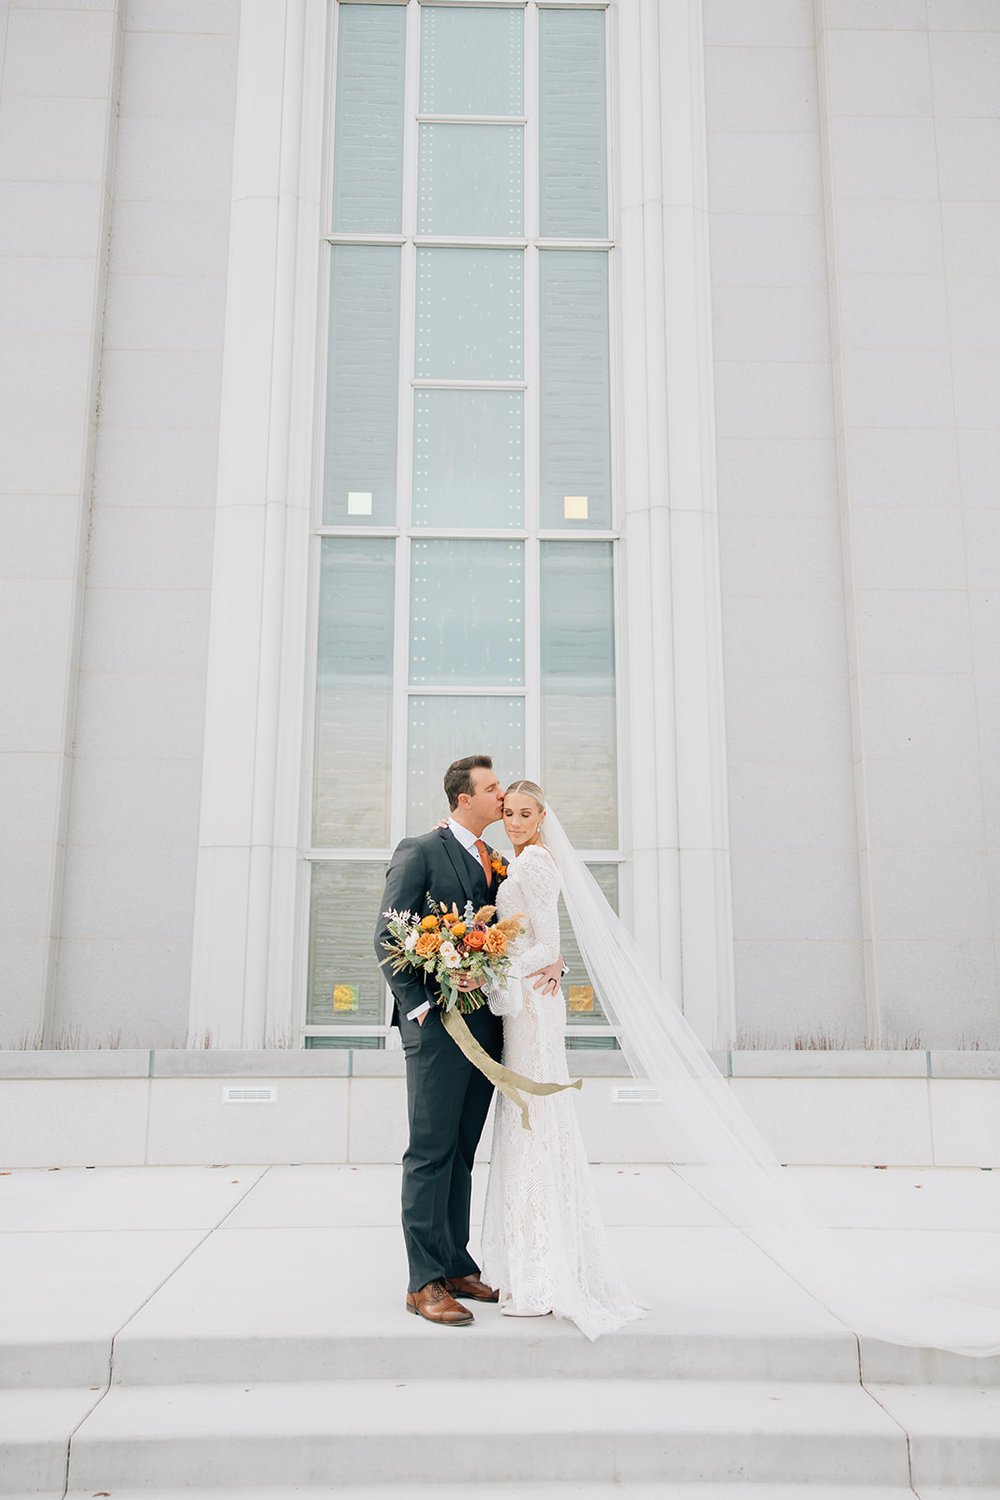 Anthology Print Wedding Invitations - Utah Wedding Venue - Utah Wedding Photographer - Boho Fall Wedding Inspiration - Utah Wedding Planner - River Bridge Wedding Venue7 (5).jpg